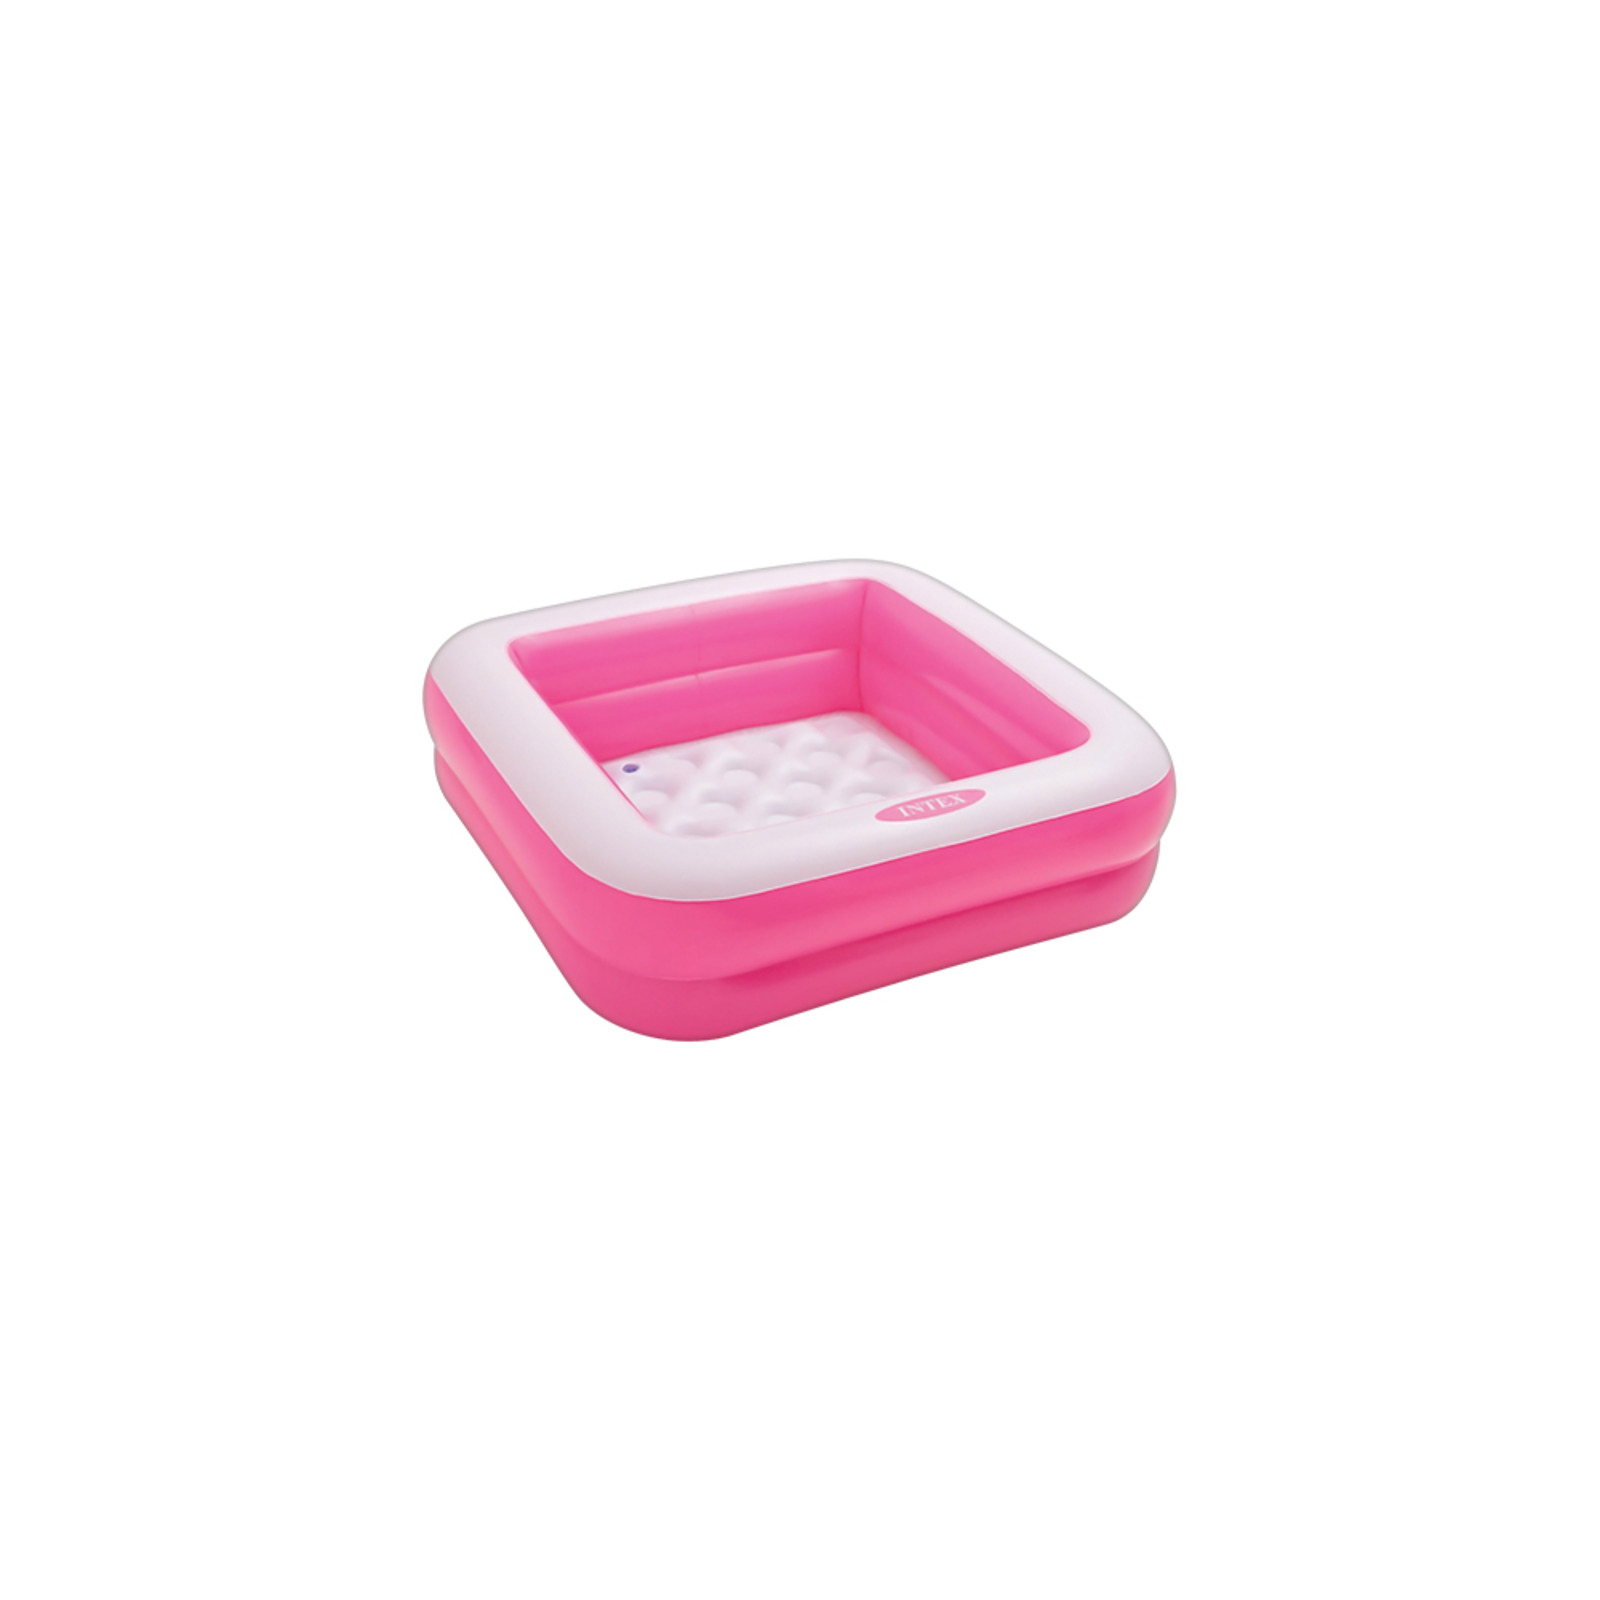 Басейн Intex Pink (Intex 57100 pink)